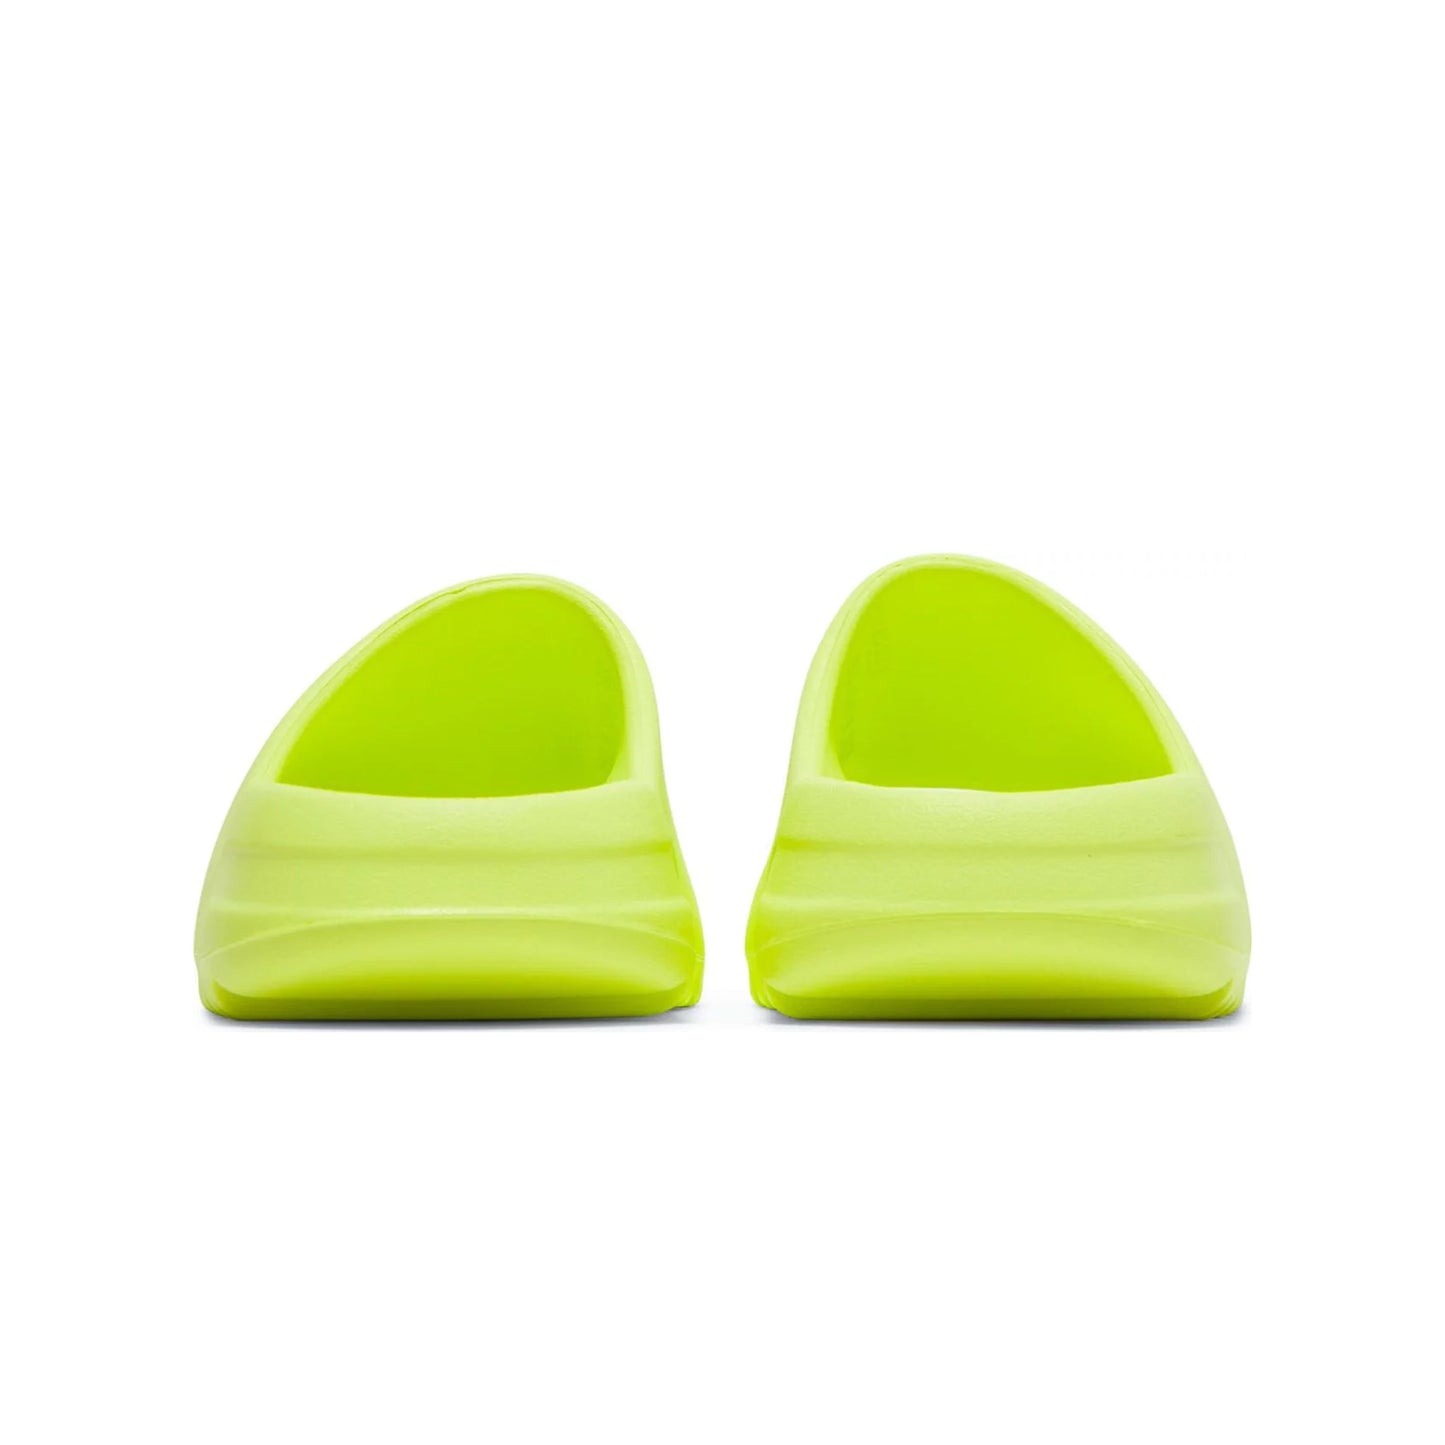 adidas Yeezy Slide Glow Green (Restock Release)